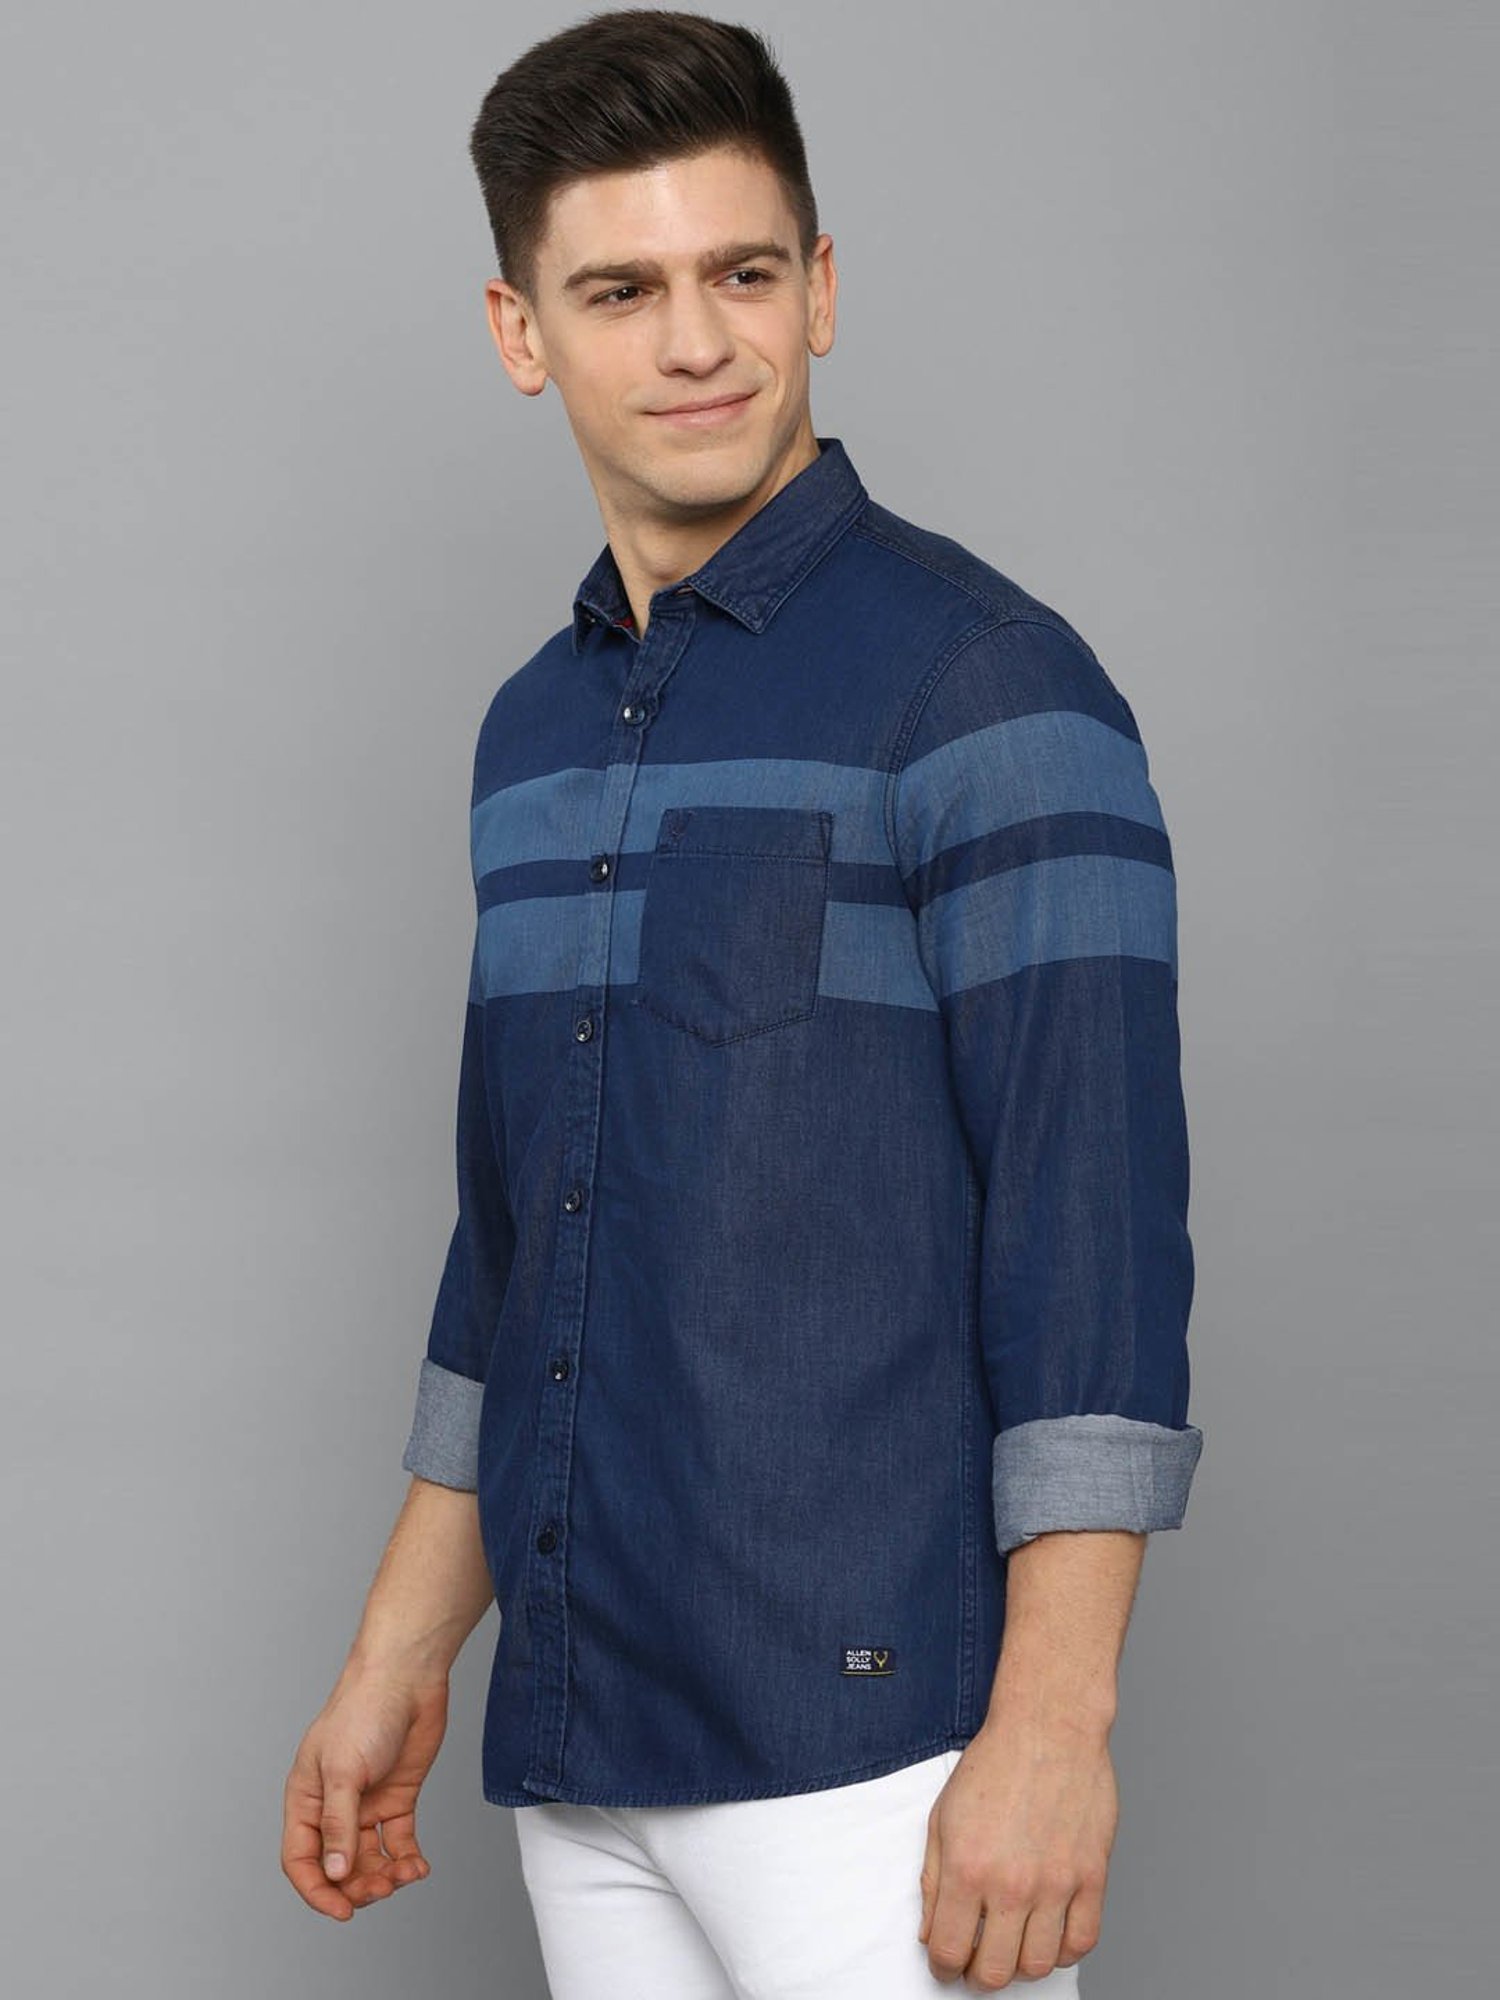 Buy Allen Solly Men's Striped Regular Fit Shirt (ALSFVCUFJ85943_Multicolour  at Amazon.in